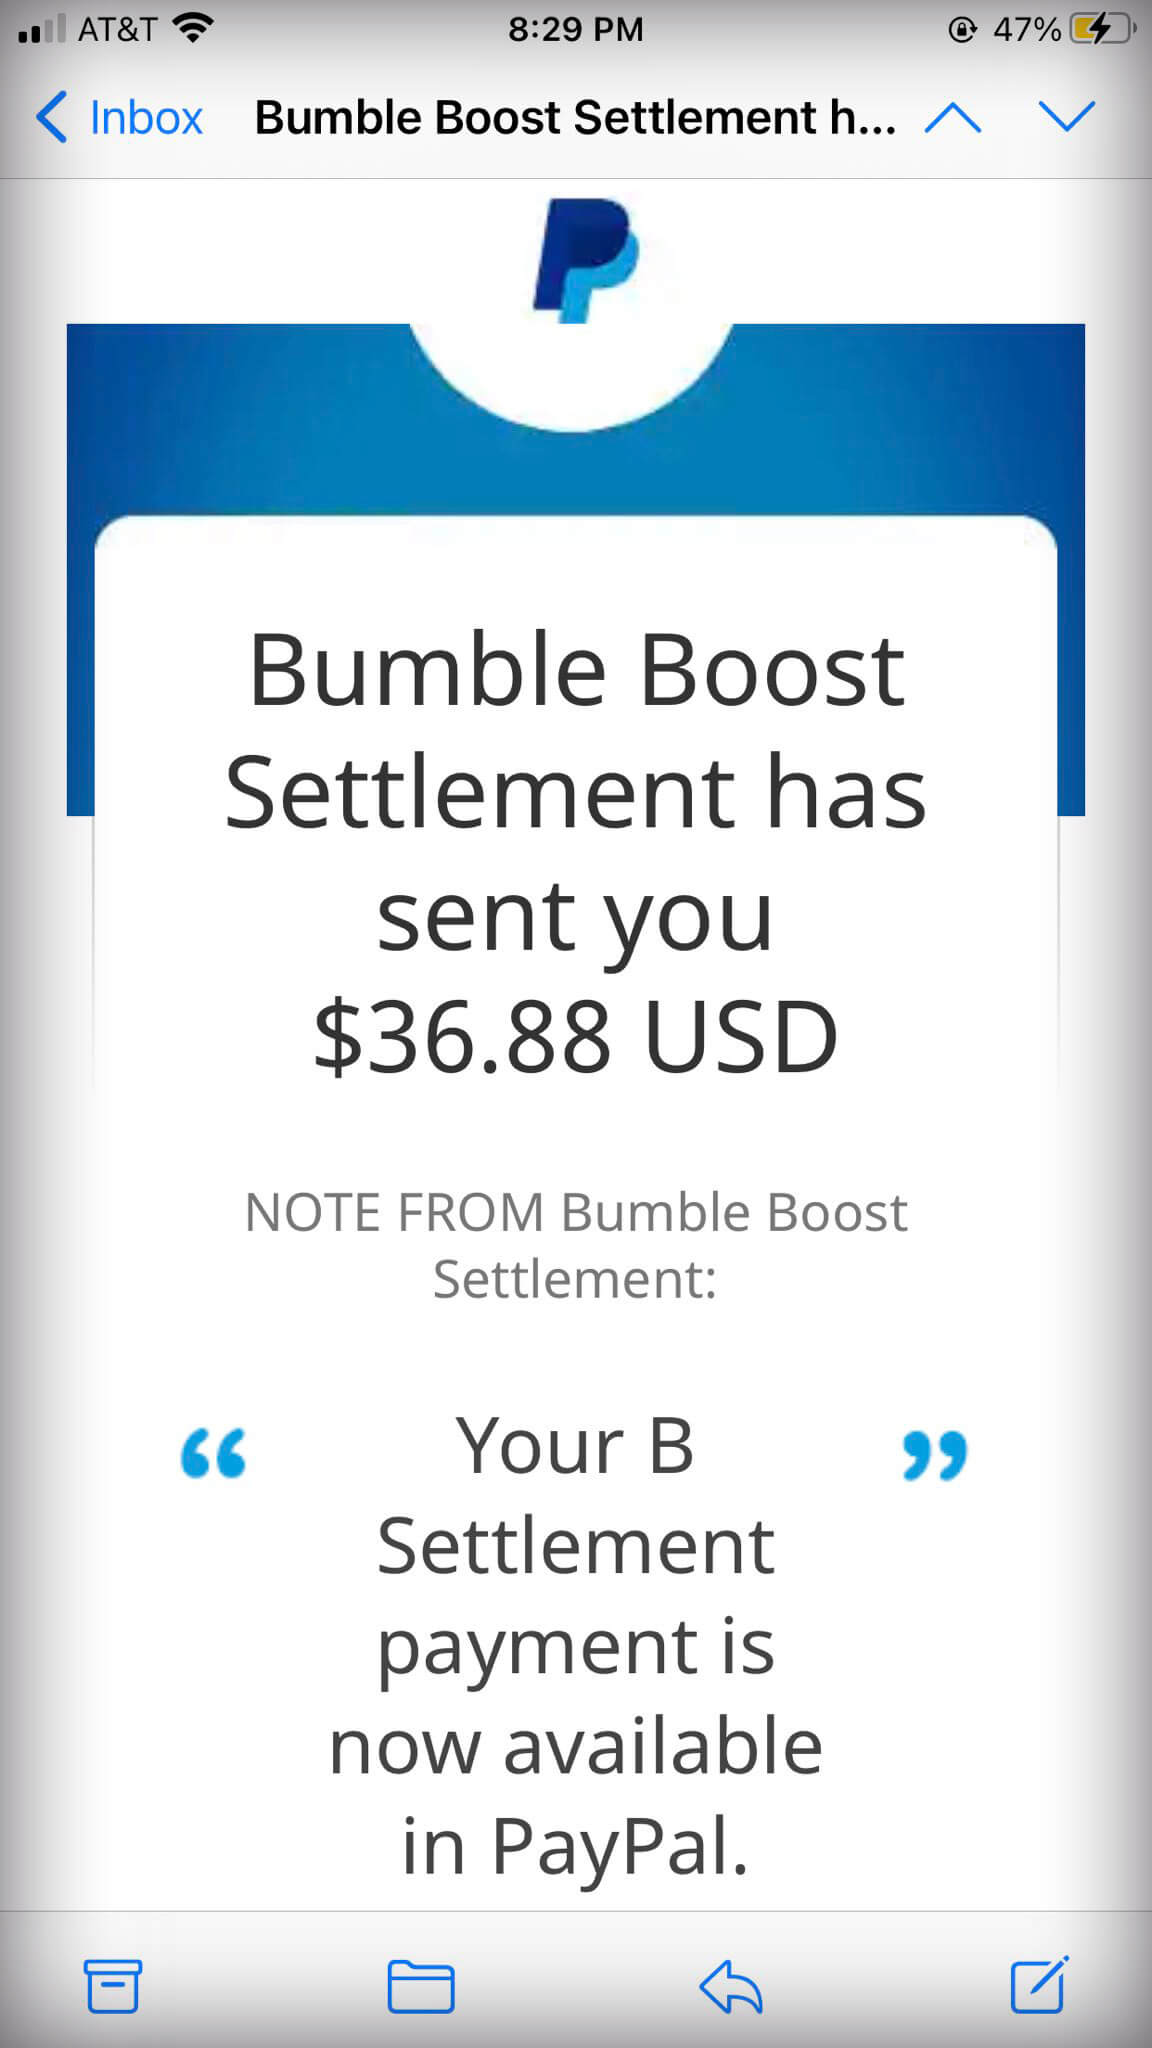 b settlement paypal